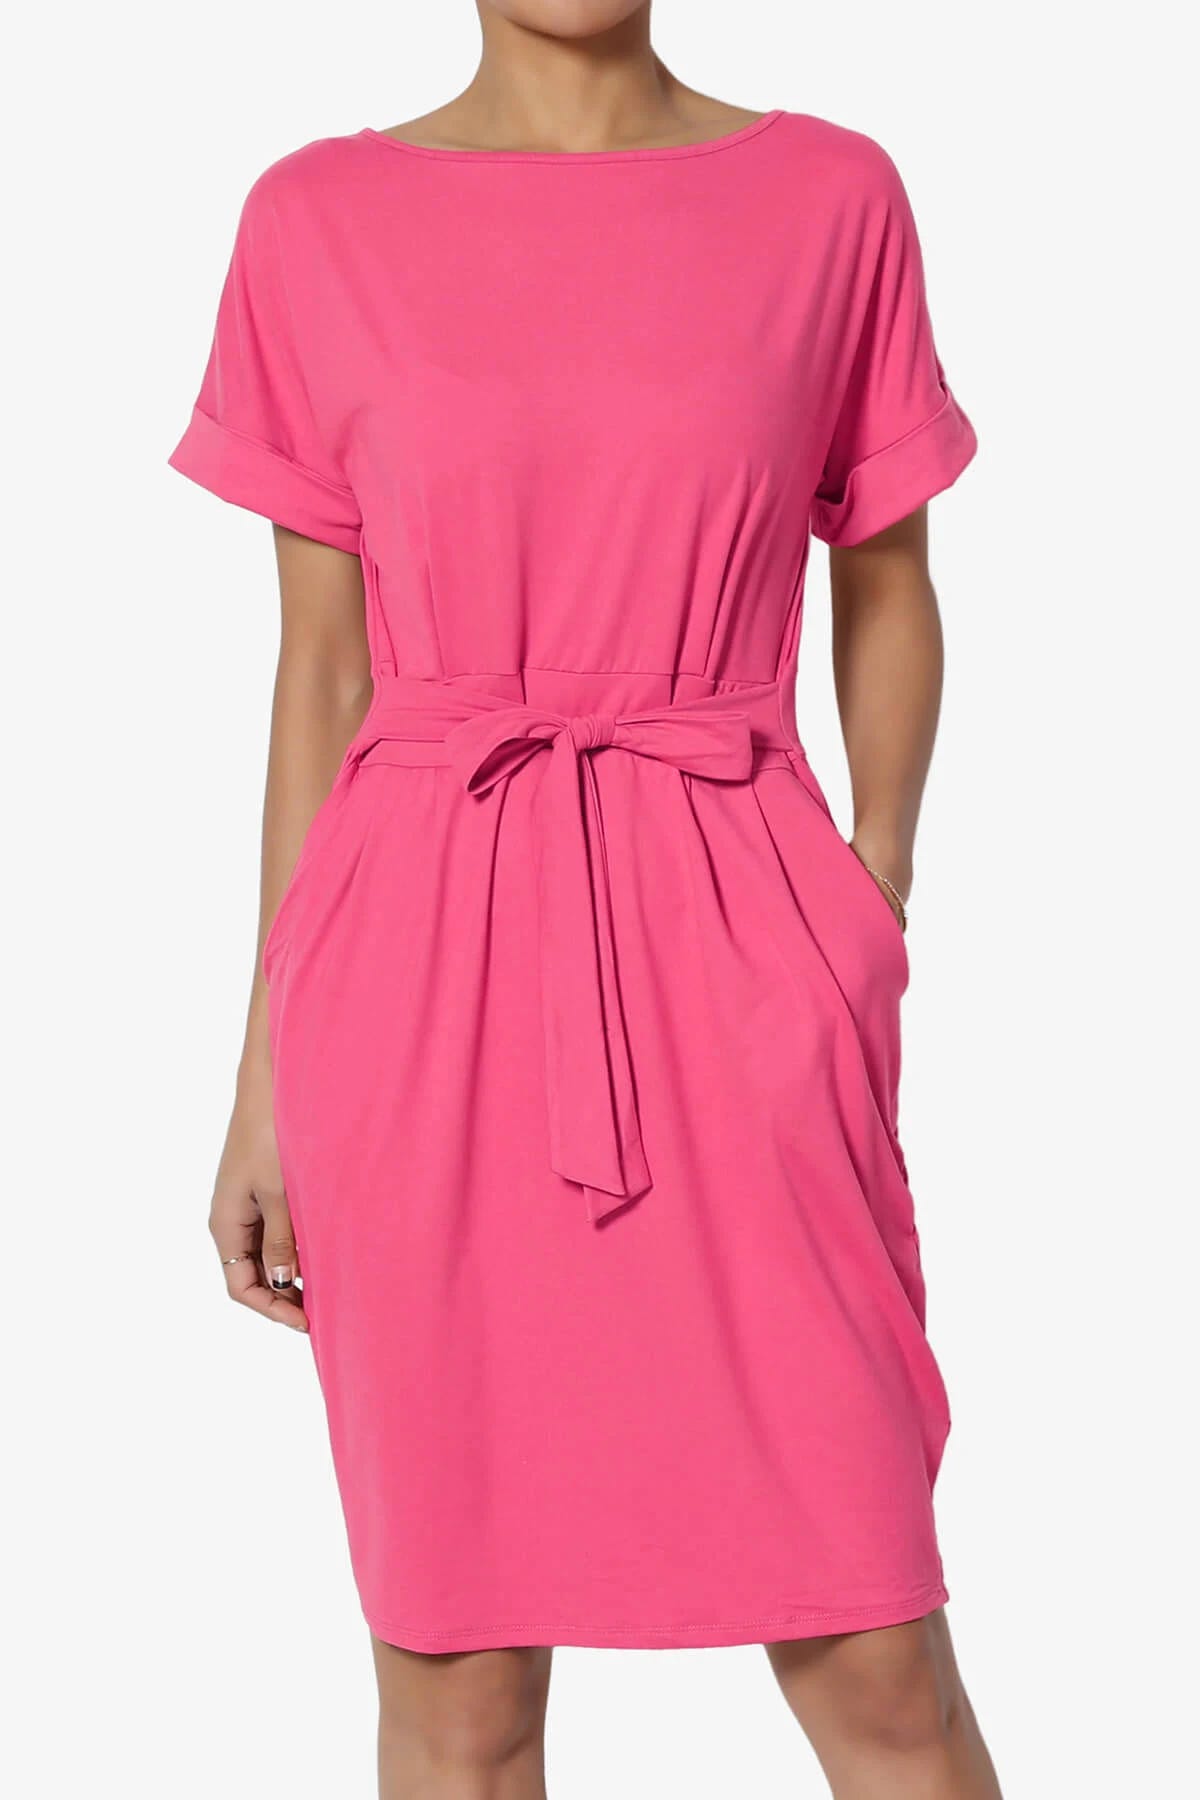 Tie-Waist Short Sleeve Shift Dress in Pink | Image